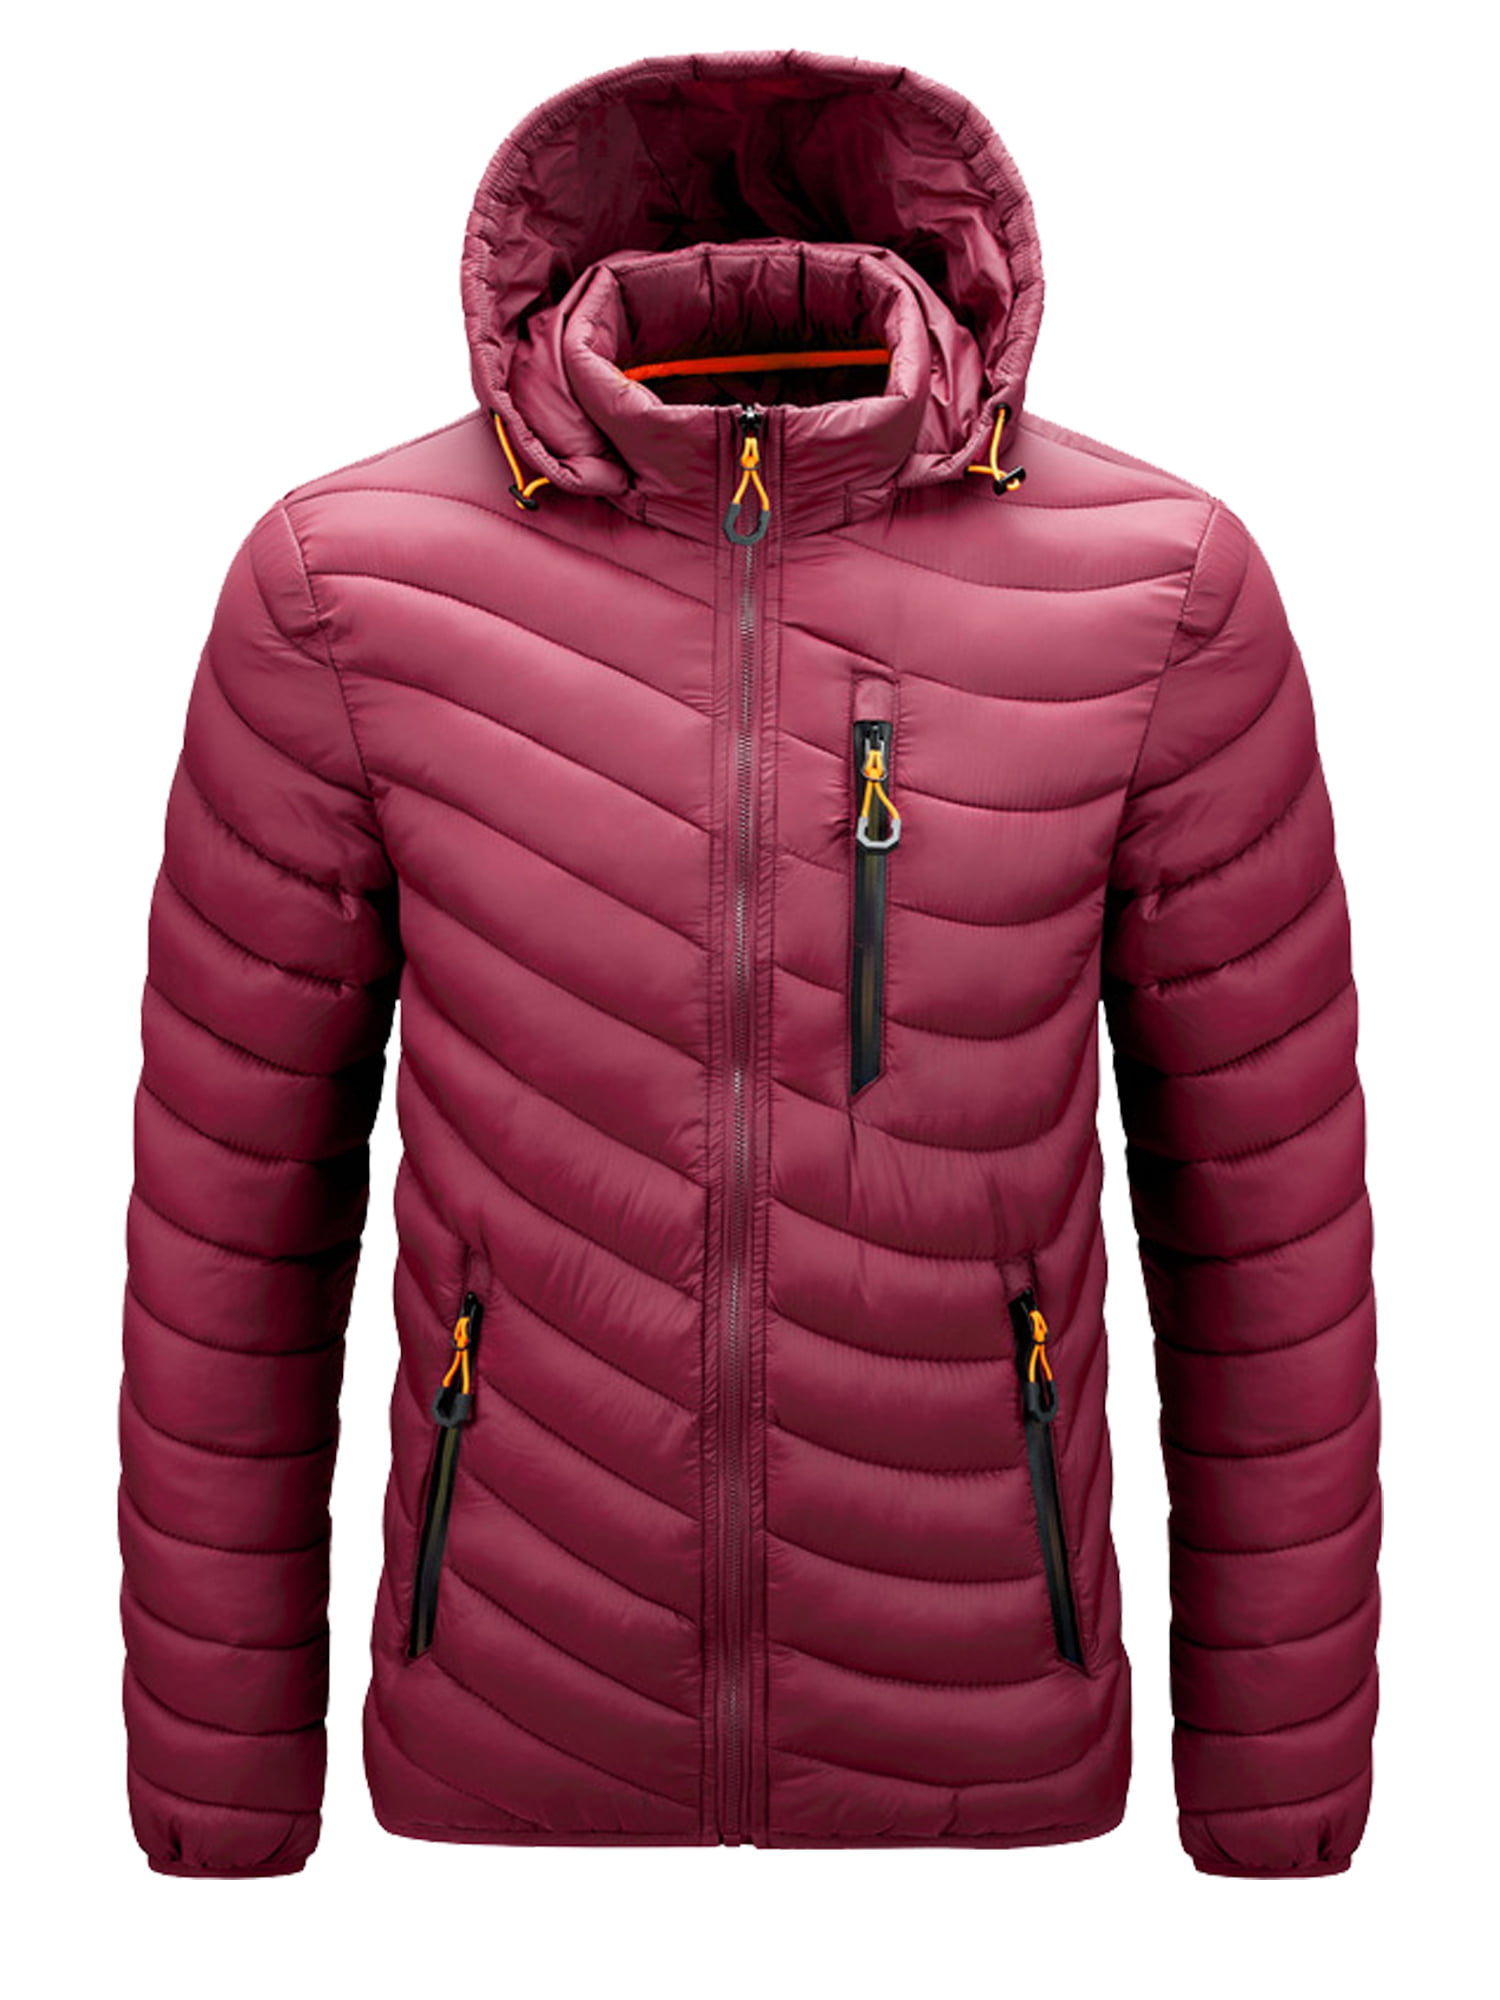 Mens Long Sleeve Solid Color Down Jacket Coats Winter Zipper Warm Down Jackets Packable Light Coat S-3XL